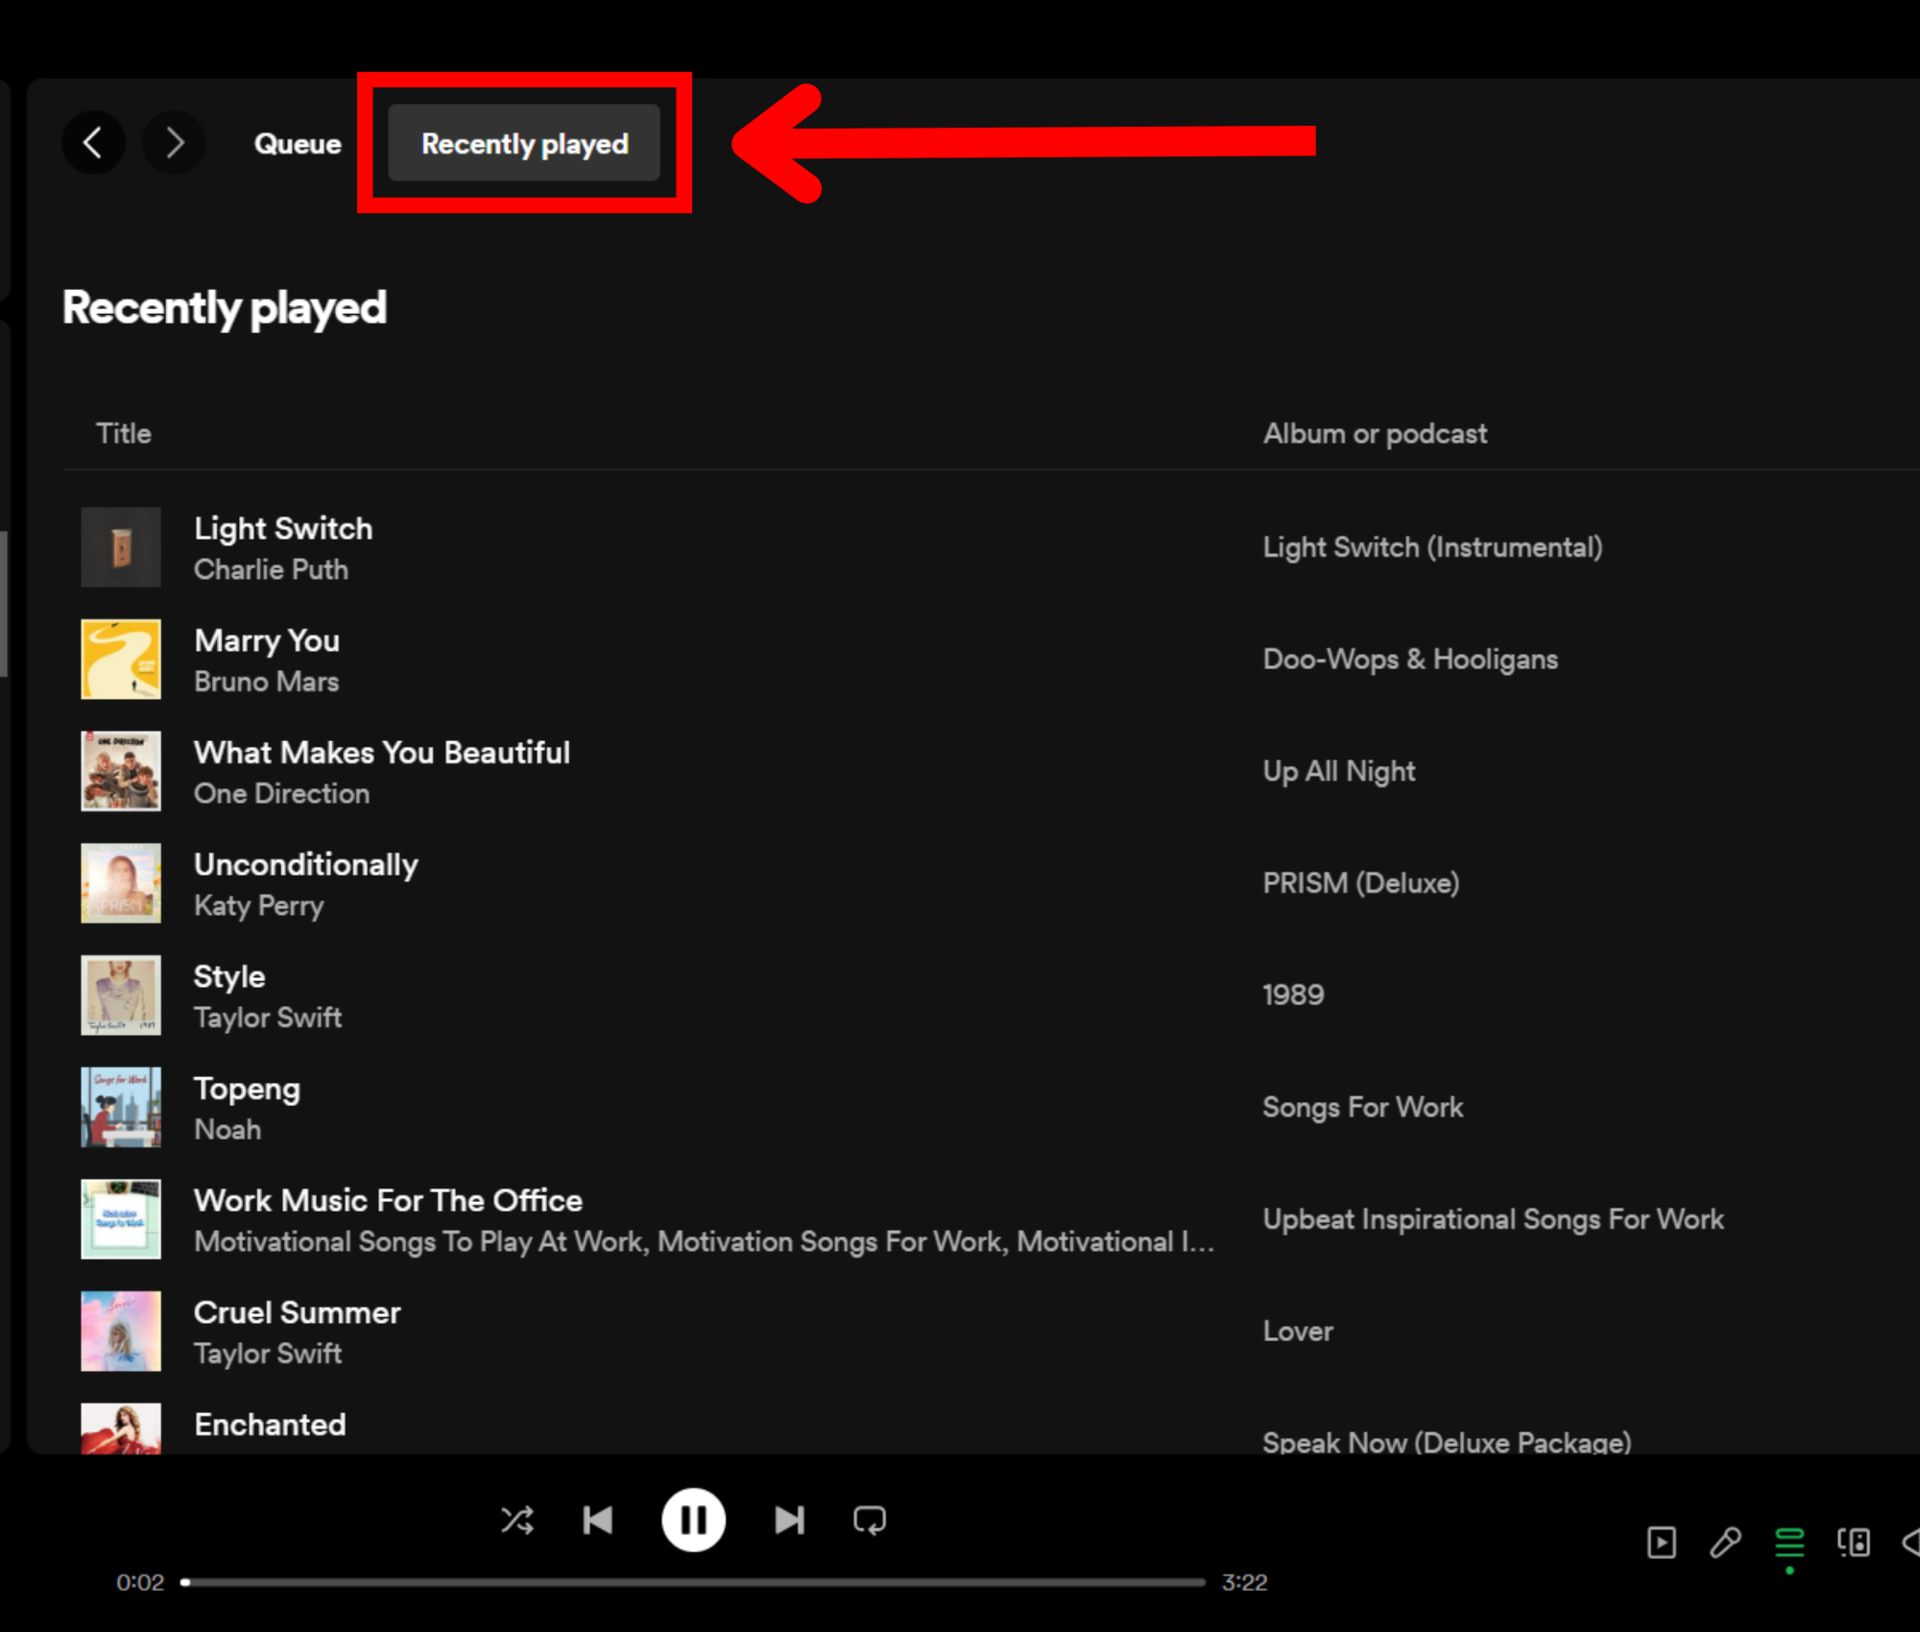 Spotify desktop app recently played